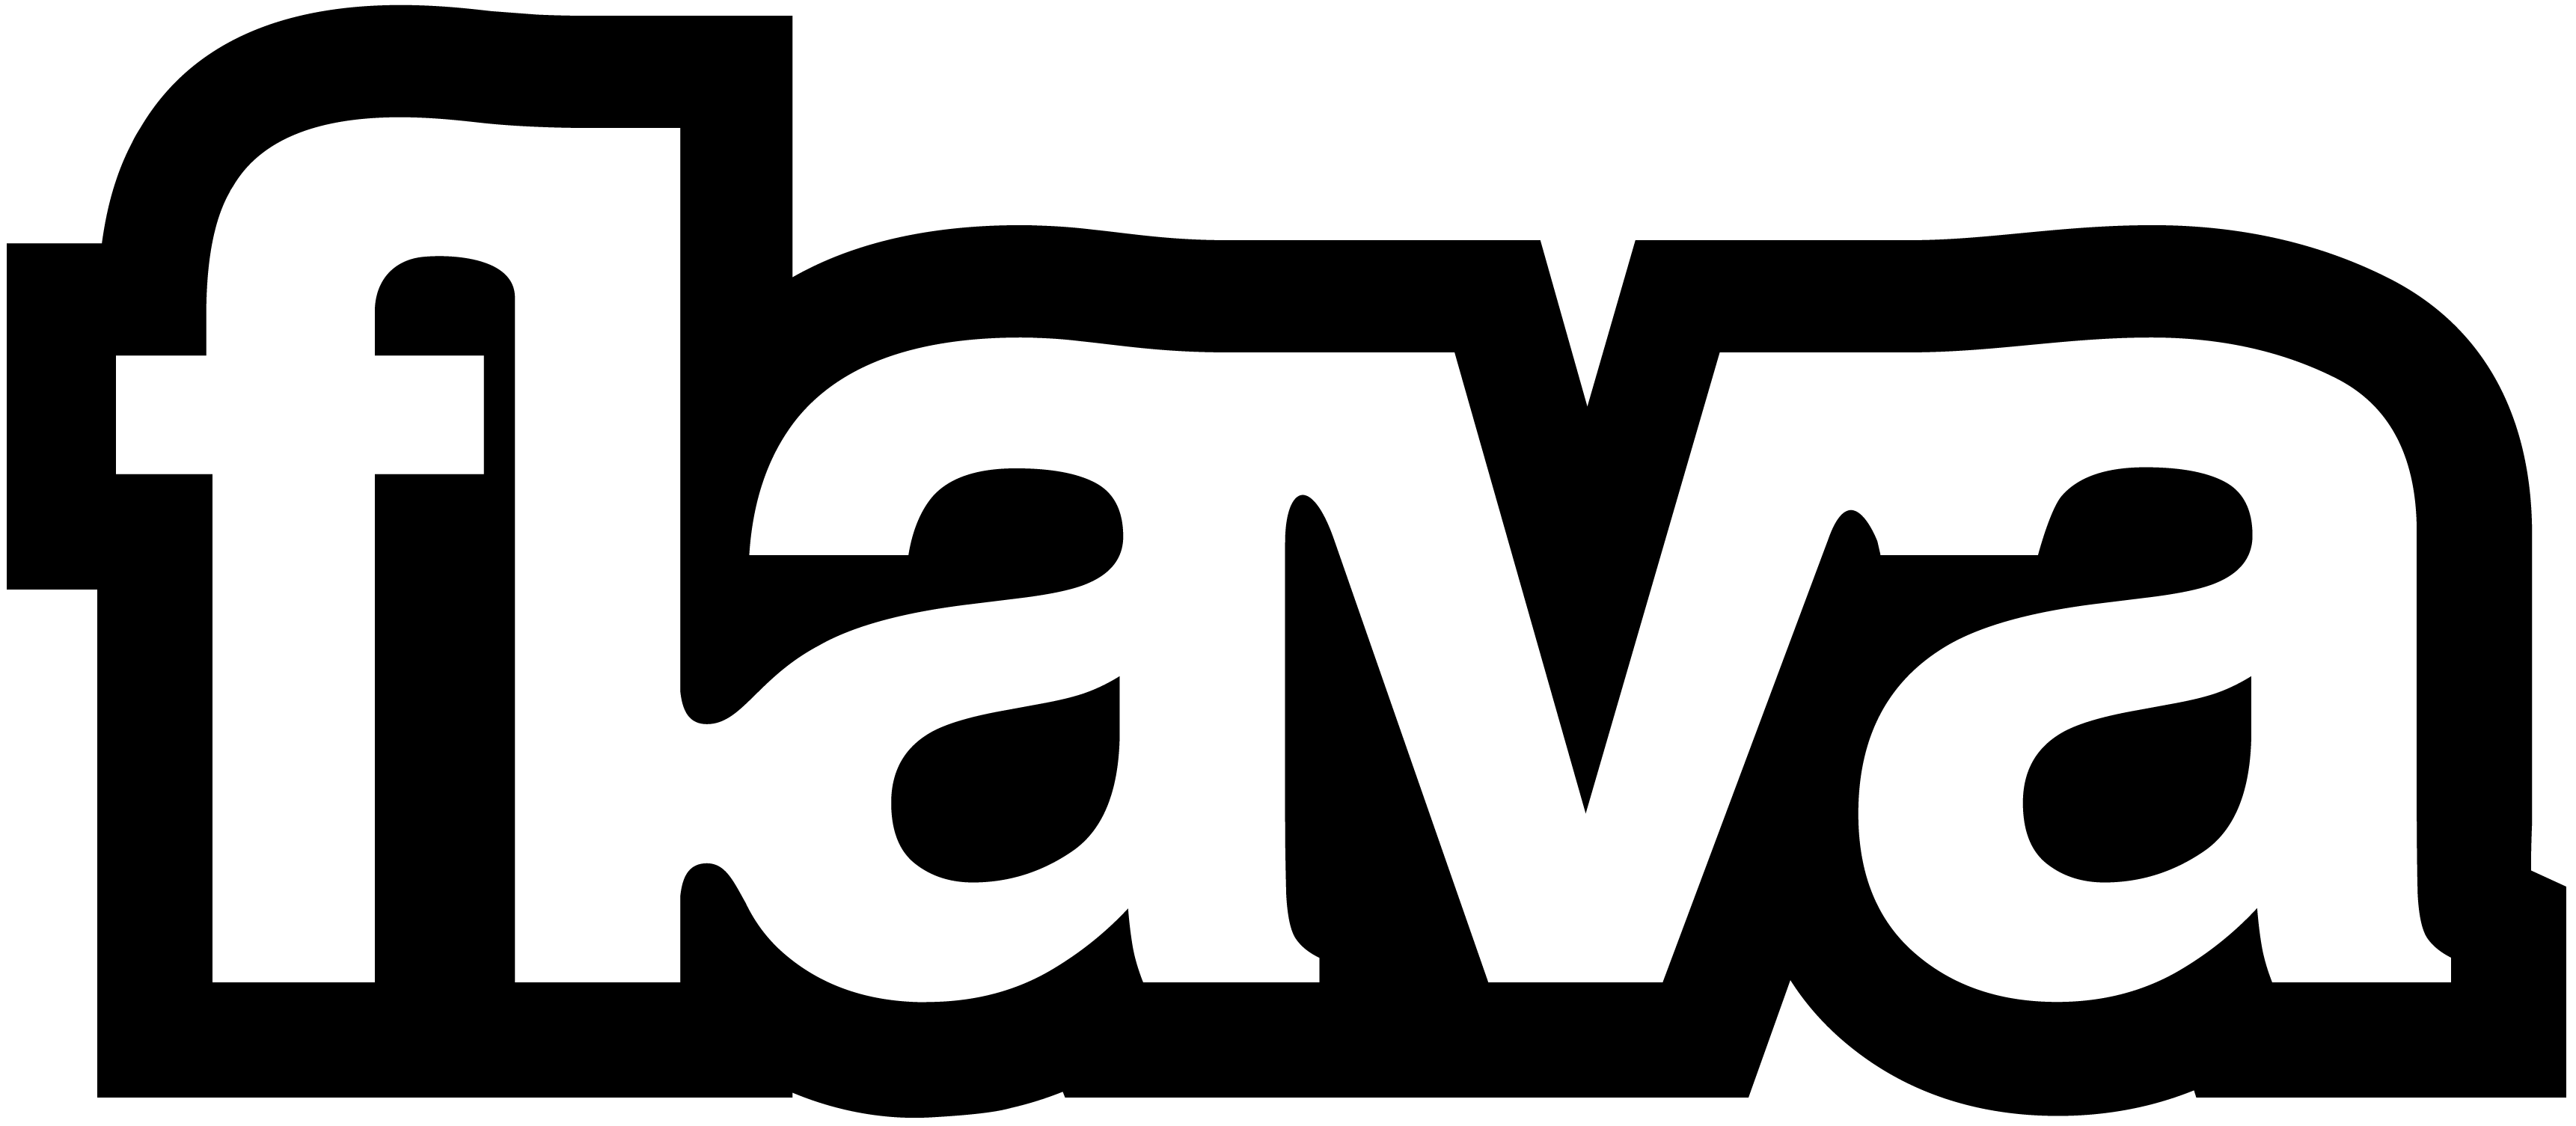 Flava logo